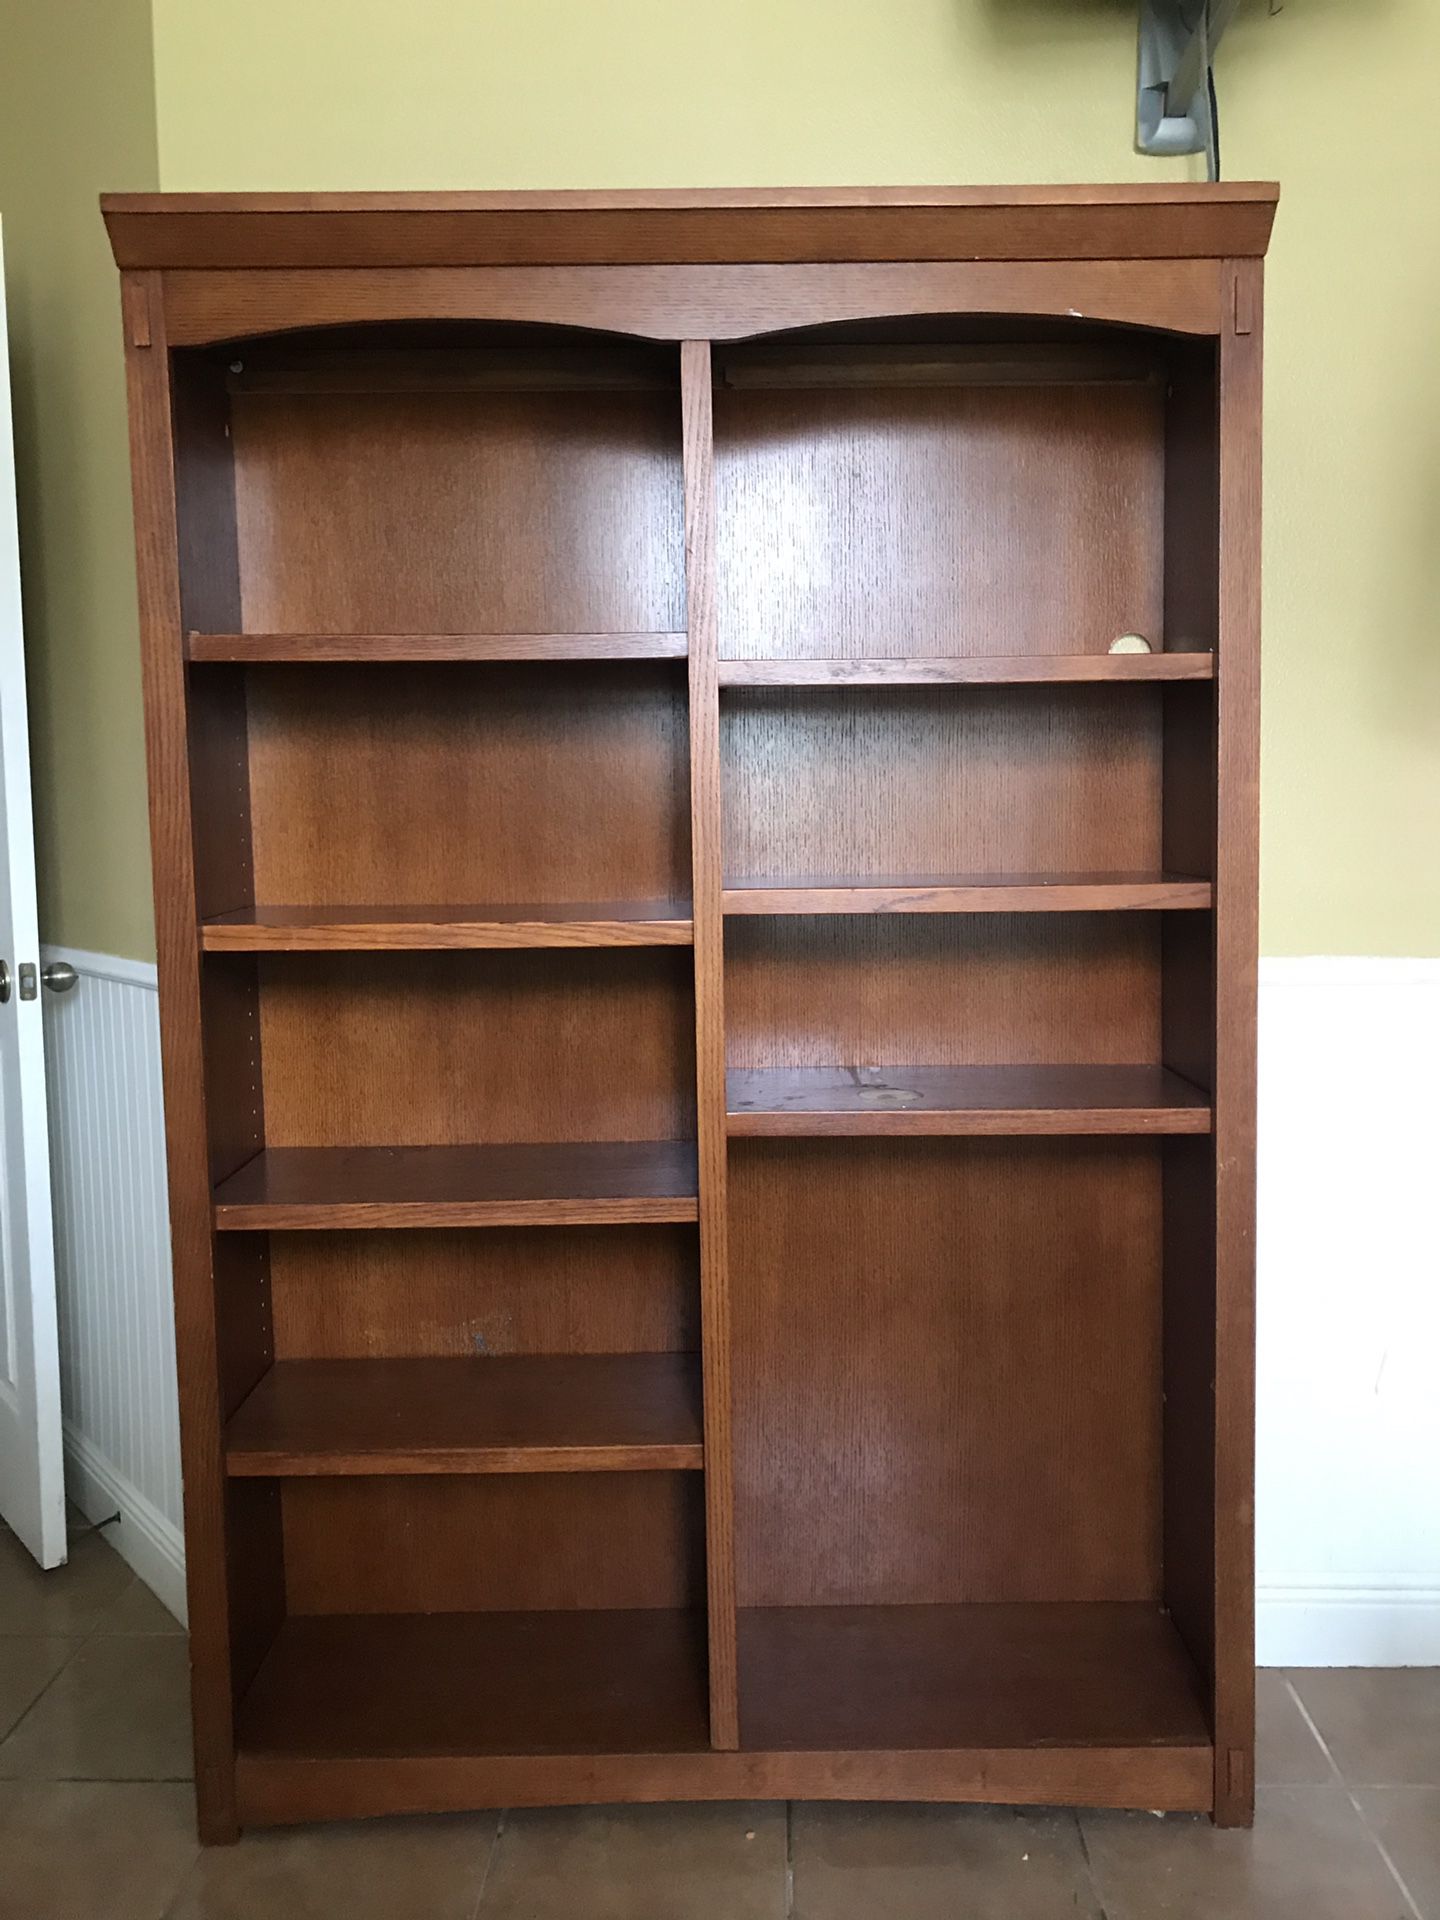 Large Rustic Bookshelf